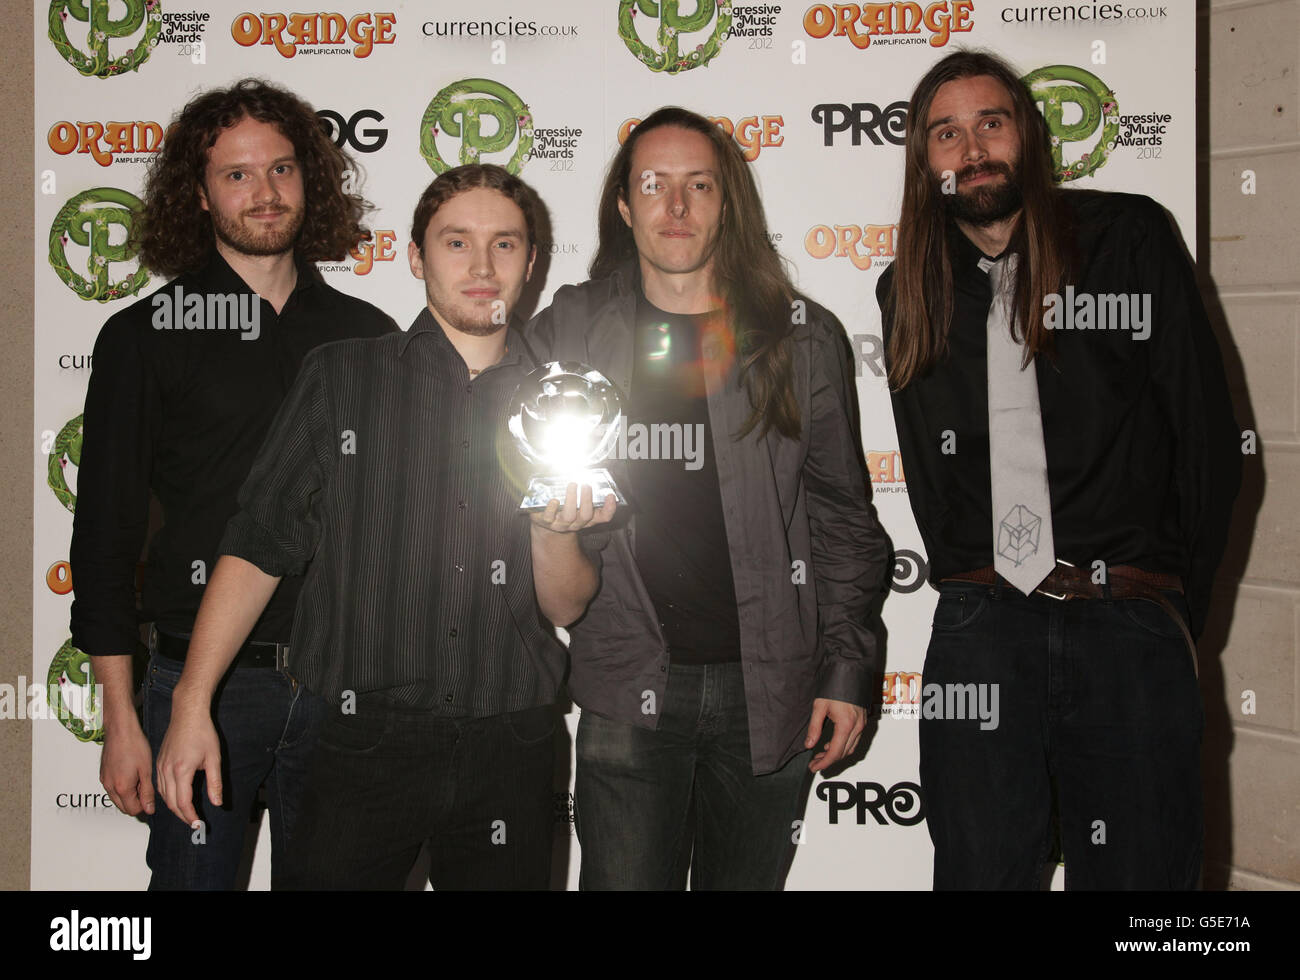 Orange Amplification Progressive Music Awards - Londra. Tesseract con il loro New Blood Award ai Progressive Music Awards presso i Kew Gardens di Richmond, Surrey. Foto Stock